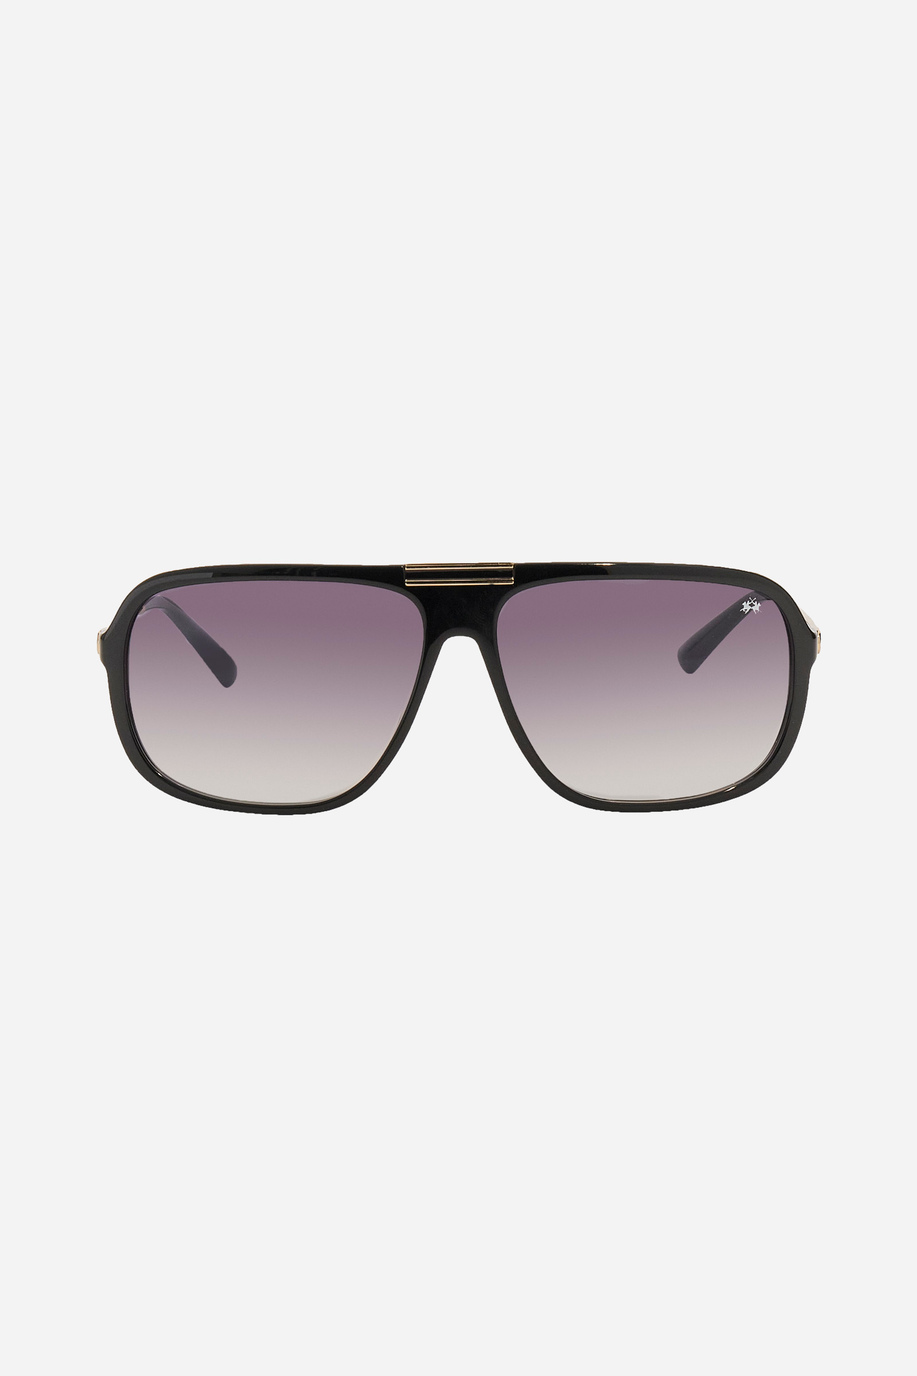 Metal sunglasses - Our favourites for him | La Martina - Official Online Shop